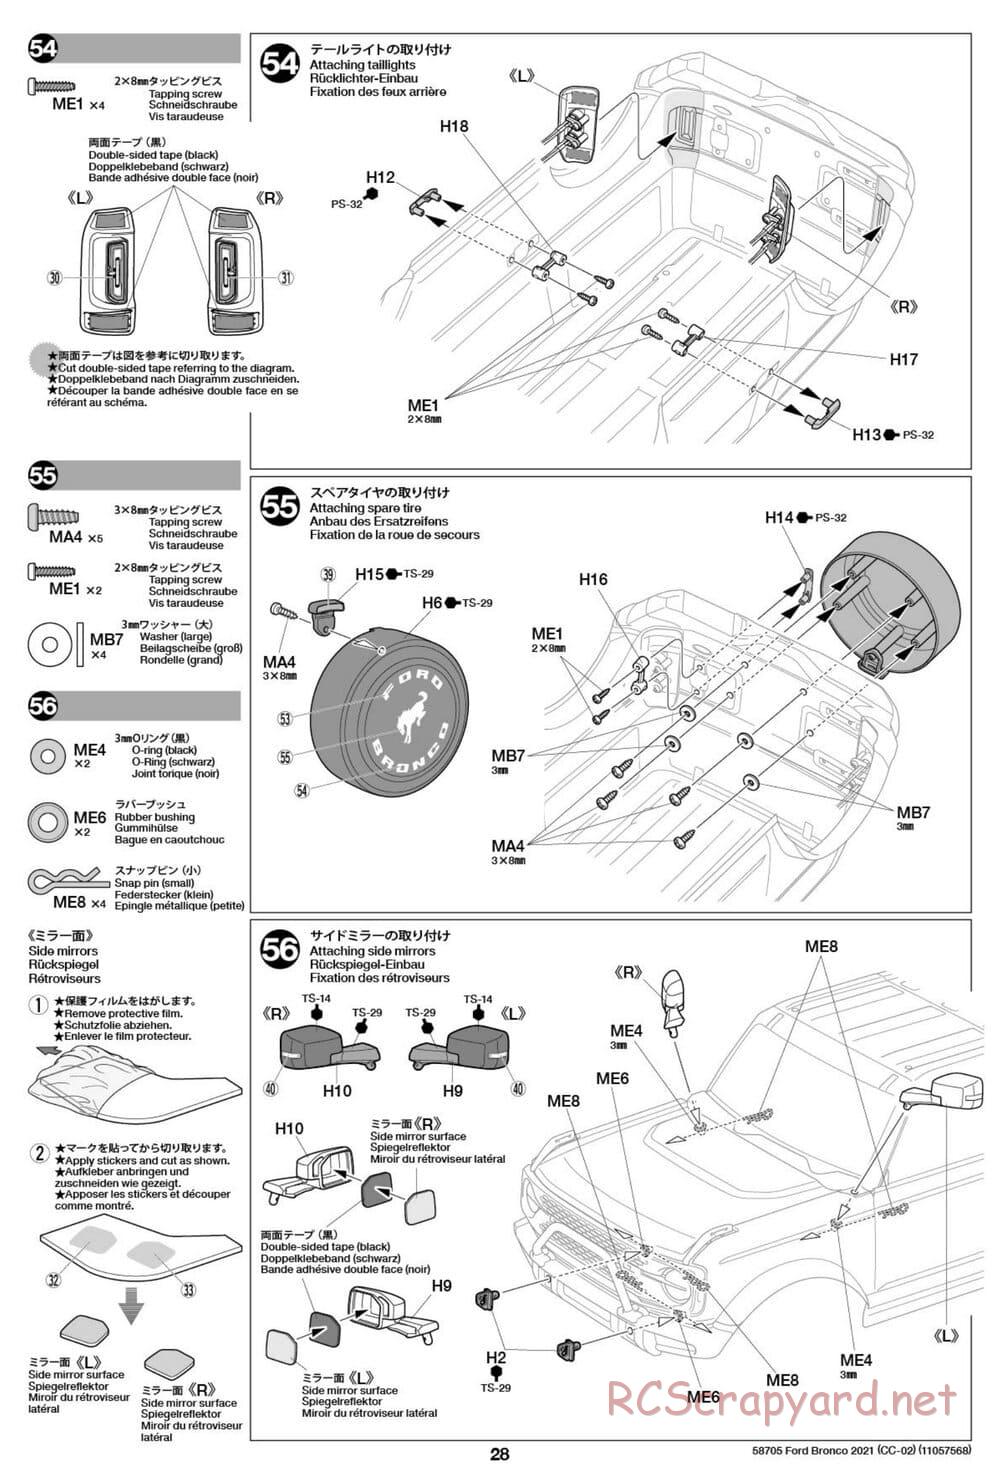 Tamiya - Ford Bronco 2021 - CC-02 Chassis - Manual - Page 28